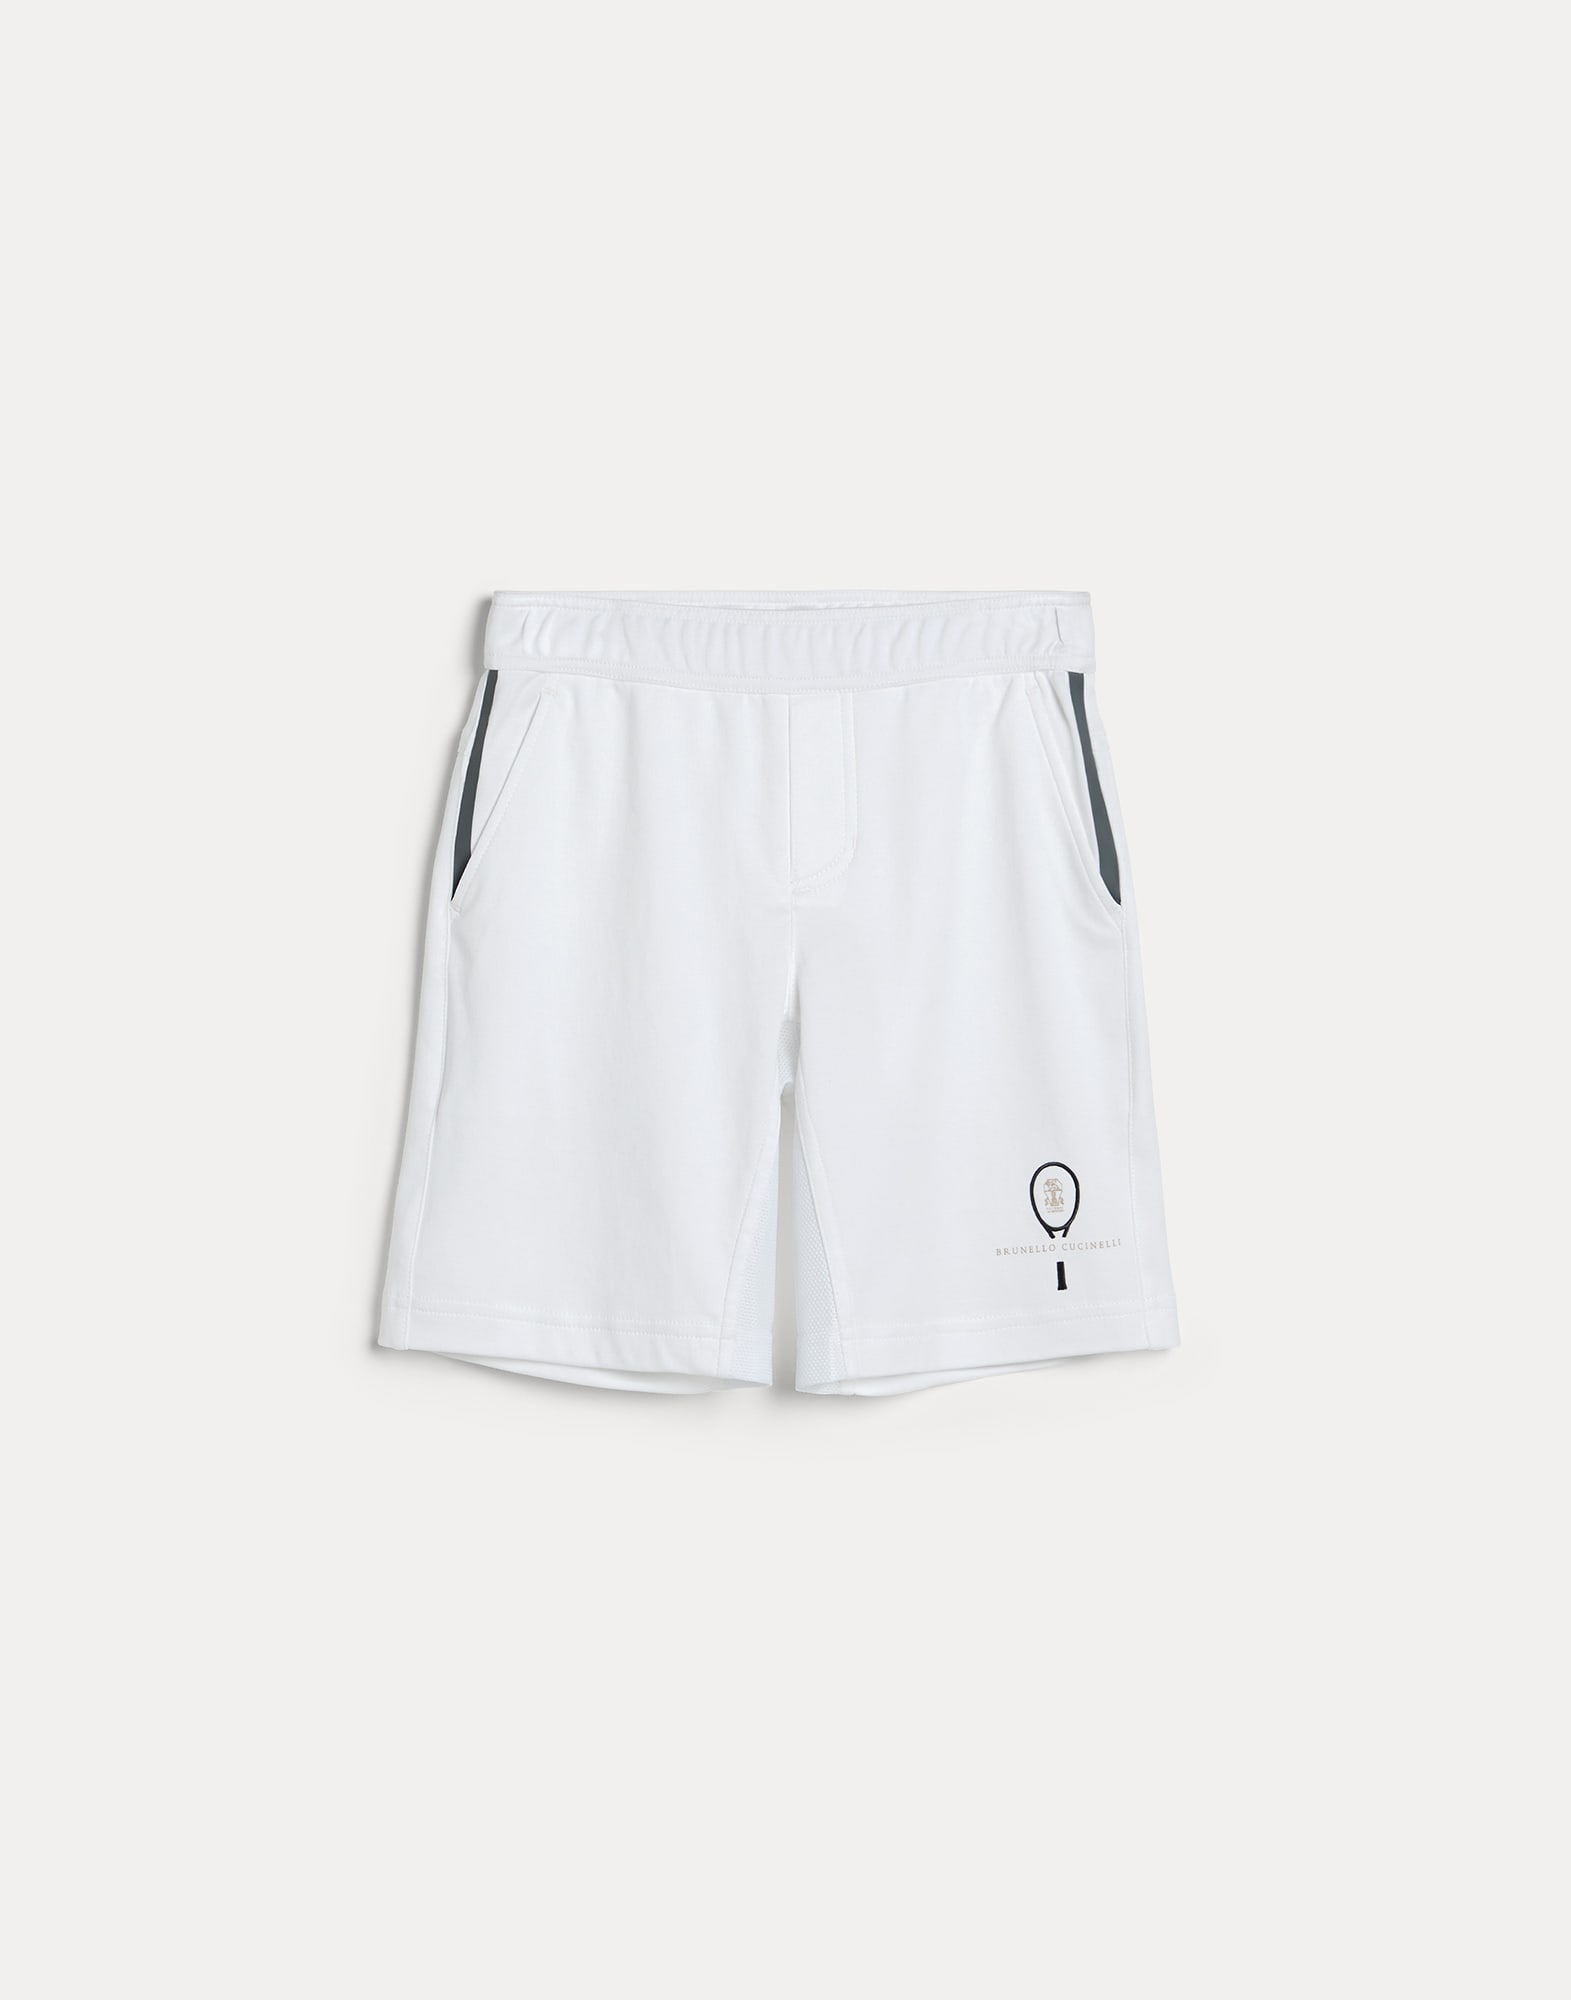 Bermuda shorts with Tennis logo